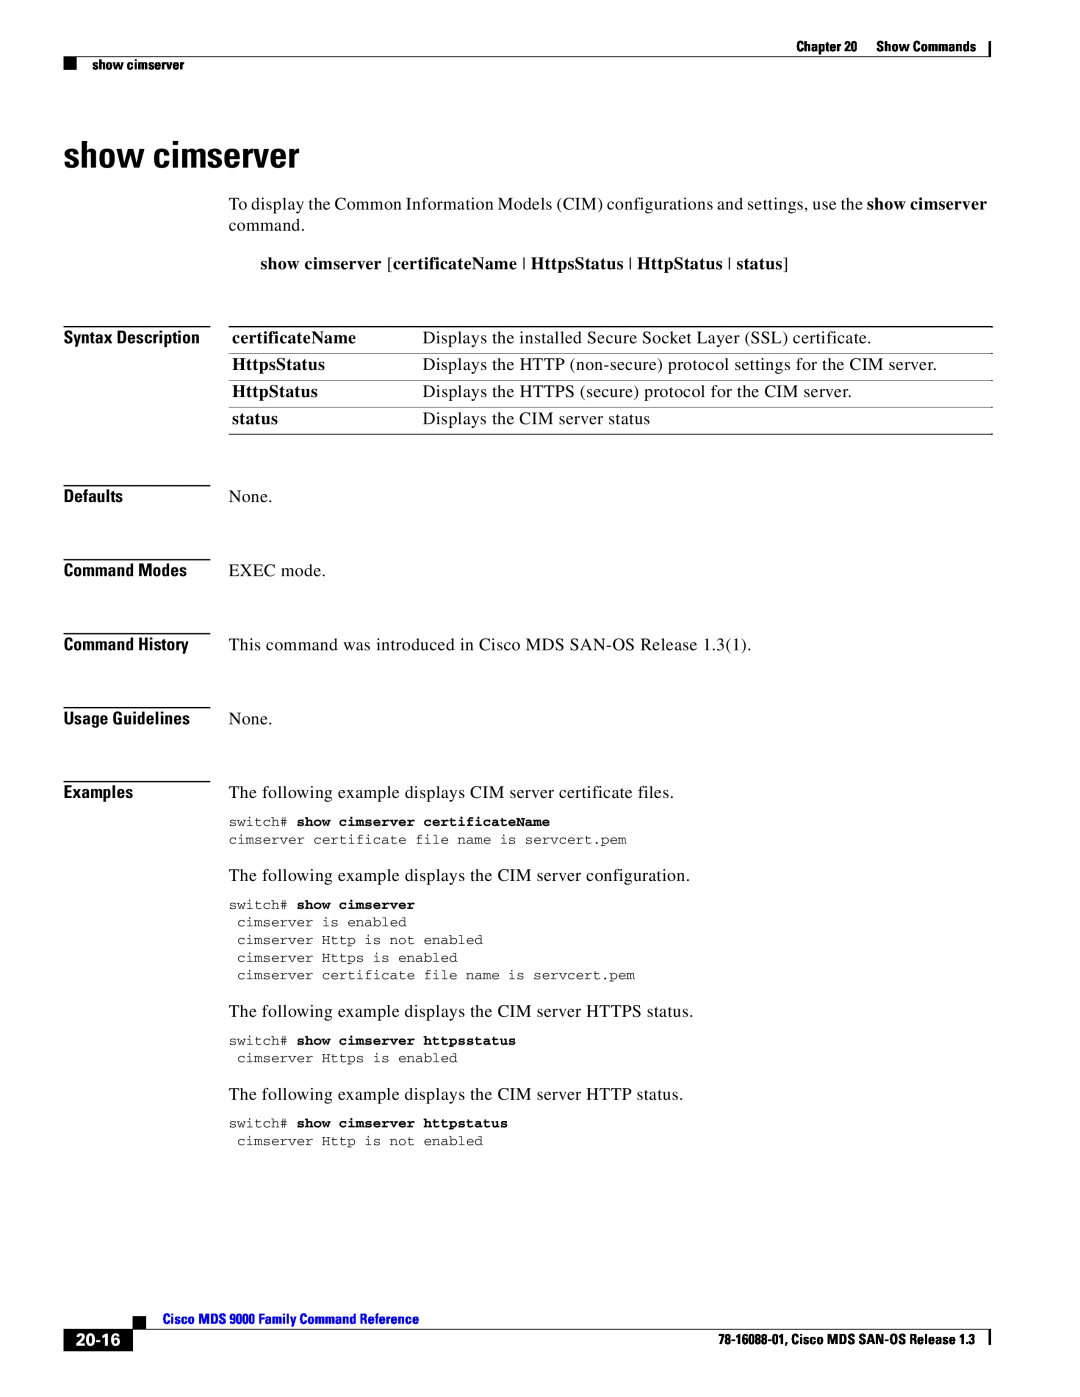 Cisco Systems MDS 9000 show cimserver certificateName HttpsStatus HttpStatus status, 20-16, Defaults, Command Modes 